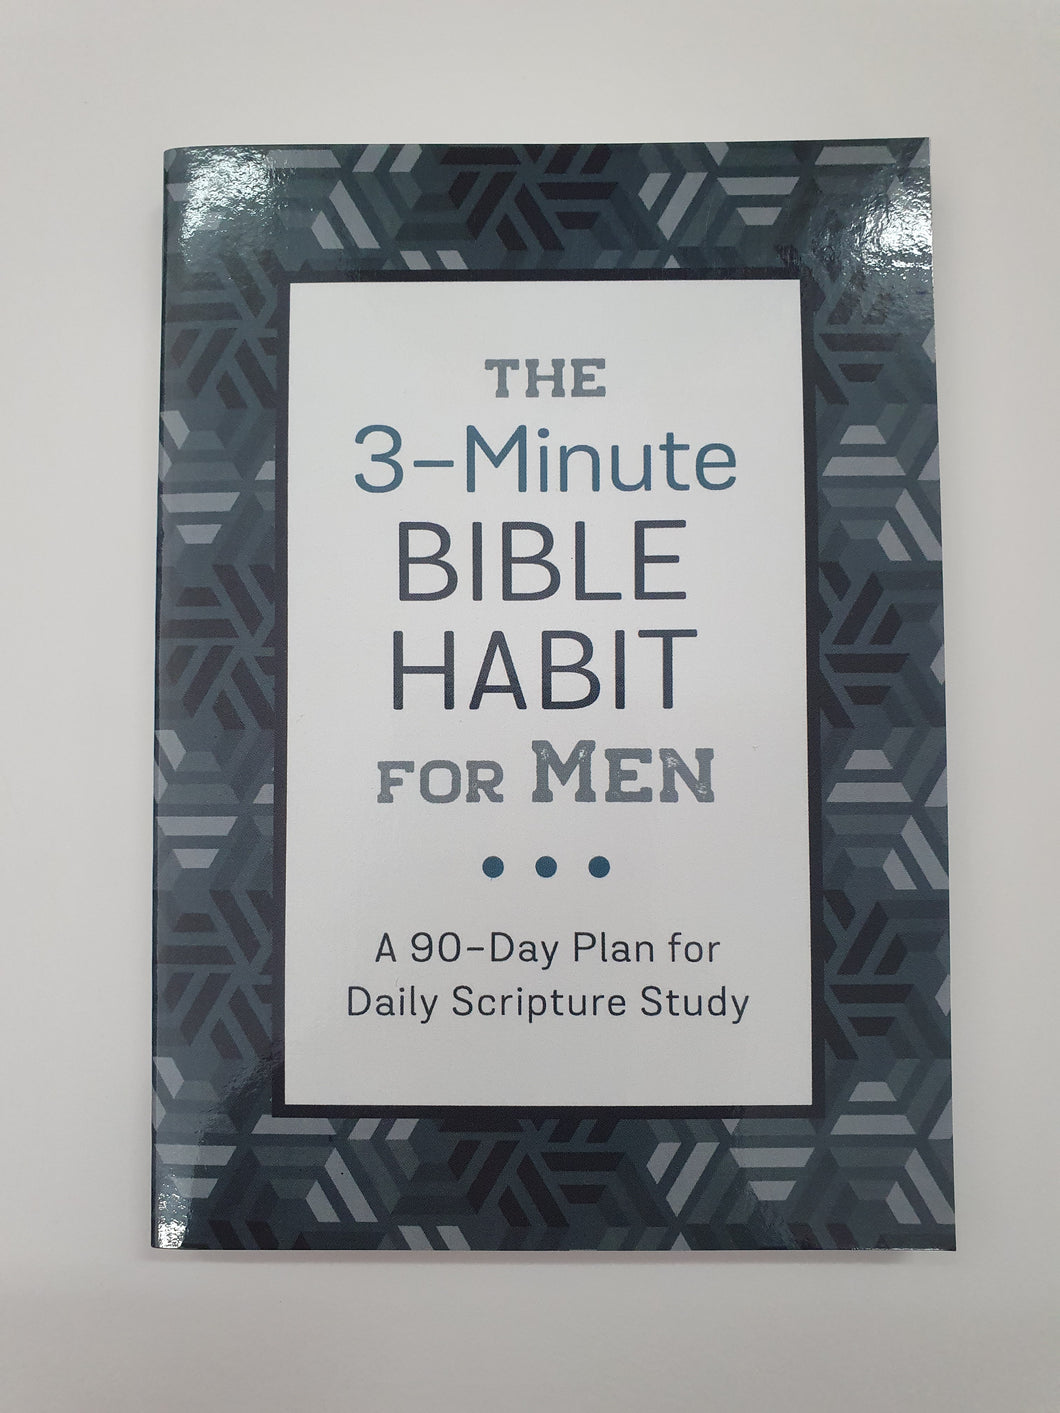 The 3-Minute Bible Habit for Men